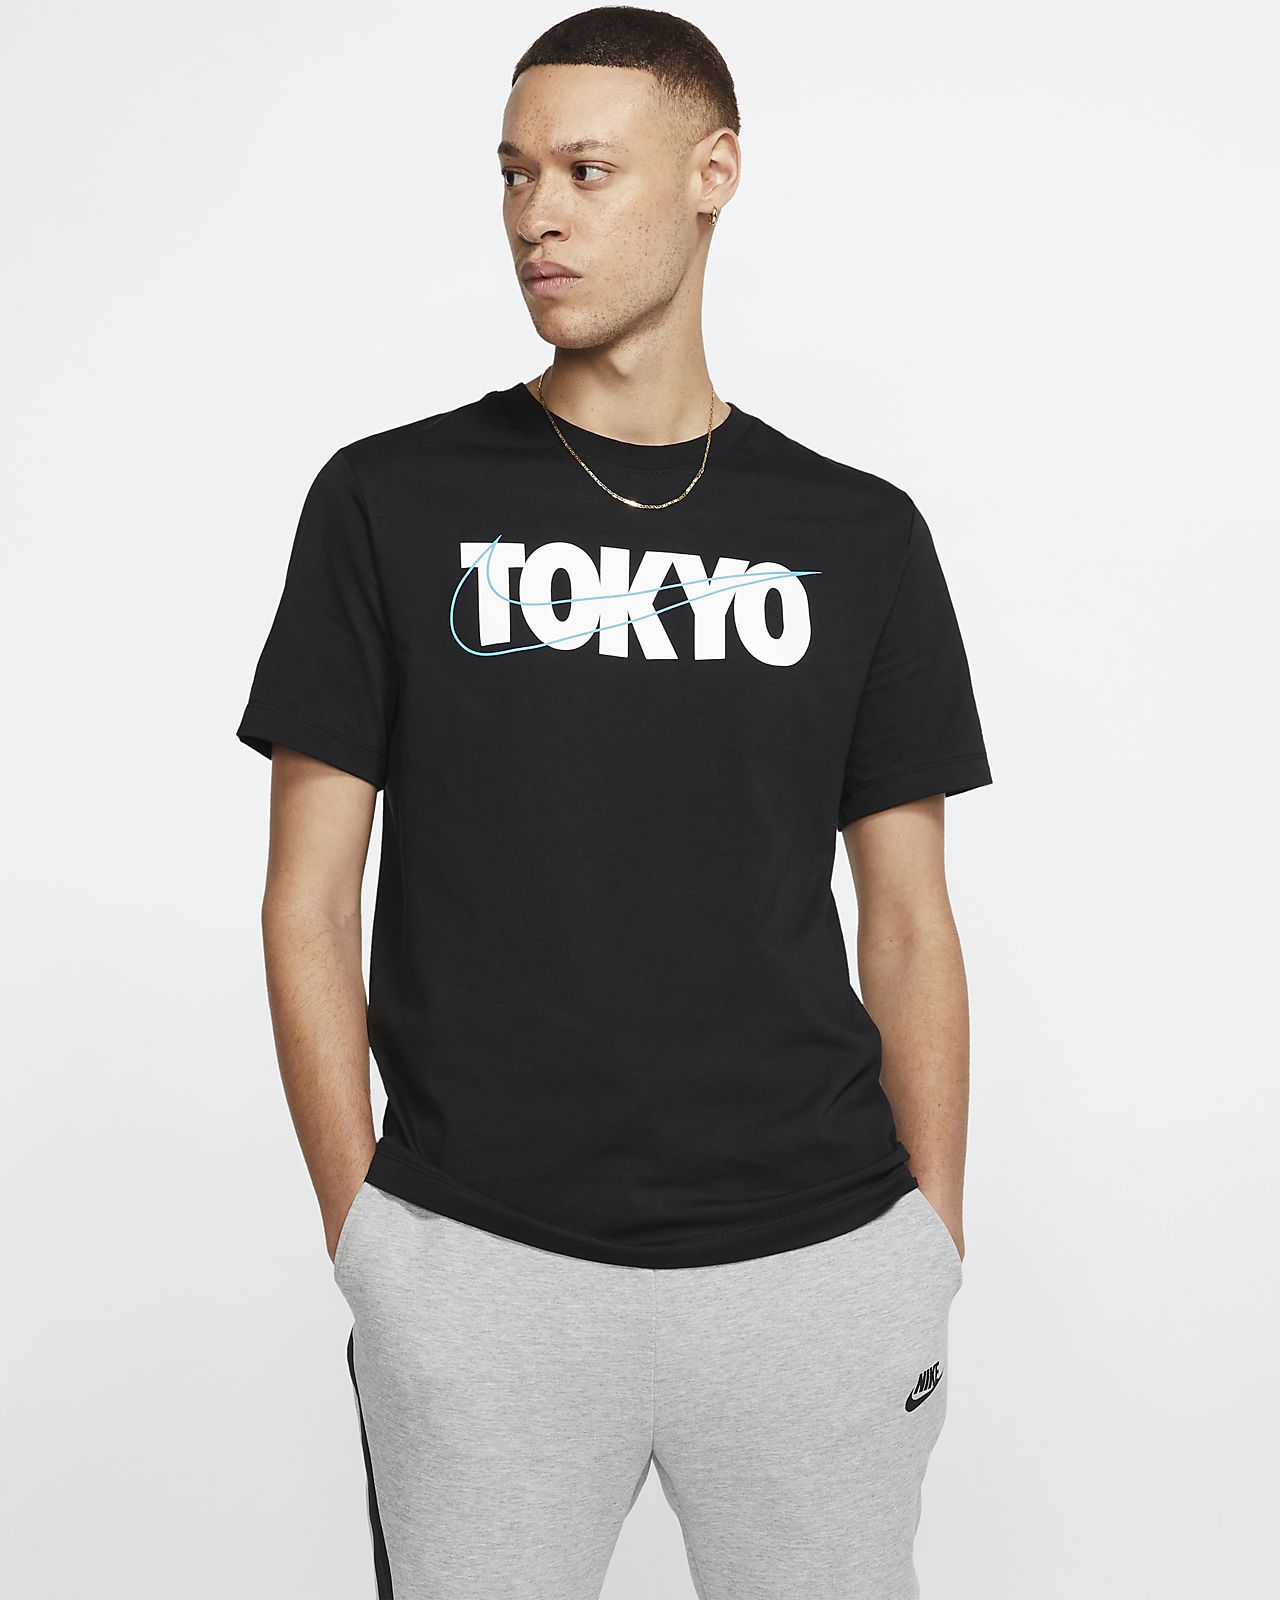 Nike公式 ナイキ メンズ Tシャツ オンラインストア 通販サイト